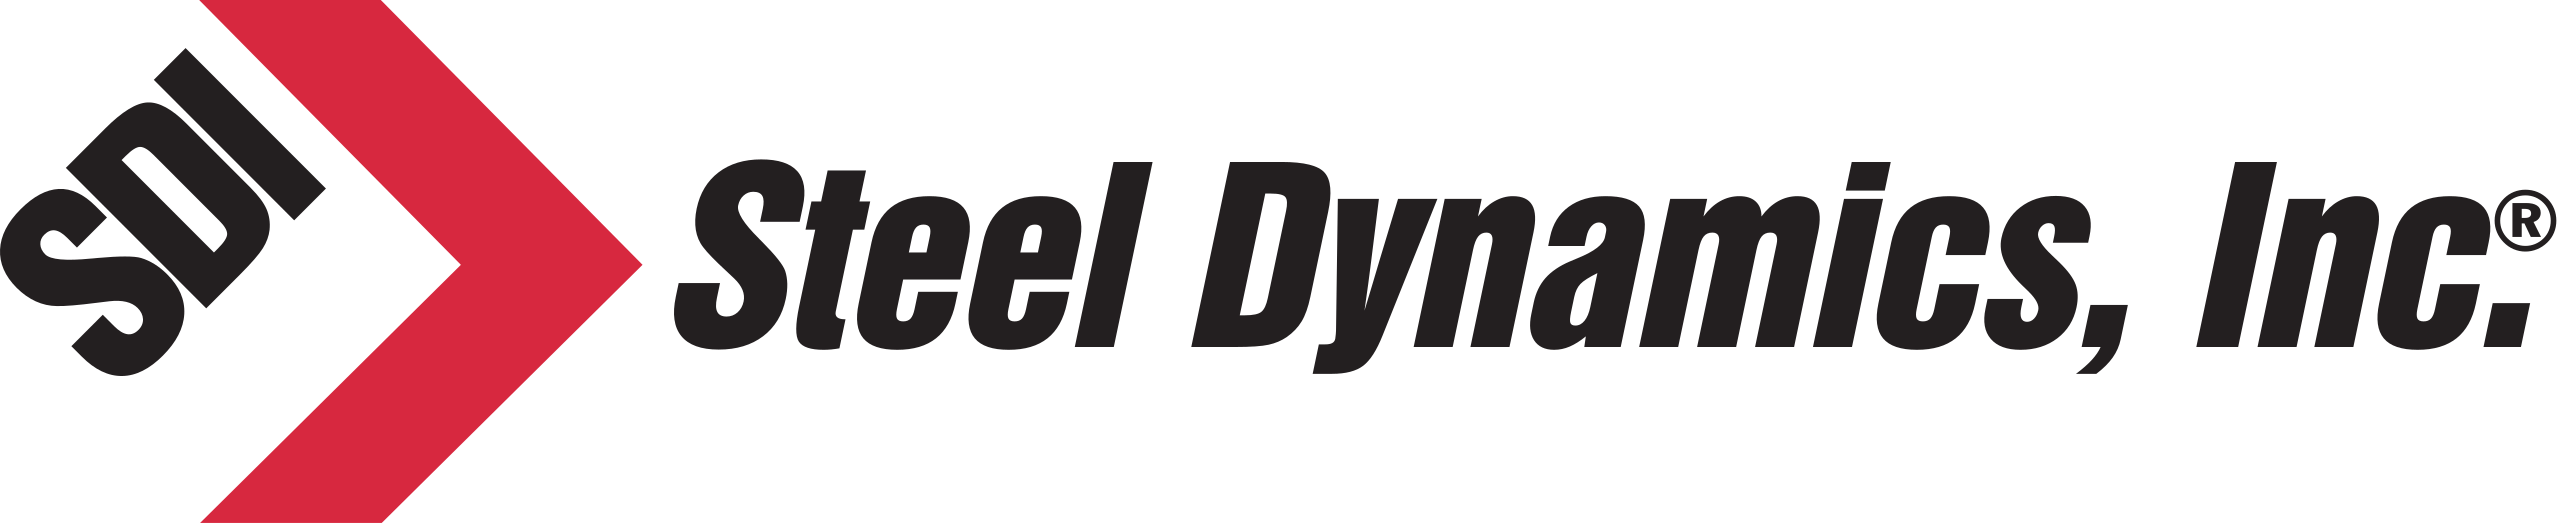 steel dynamics logo